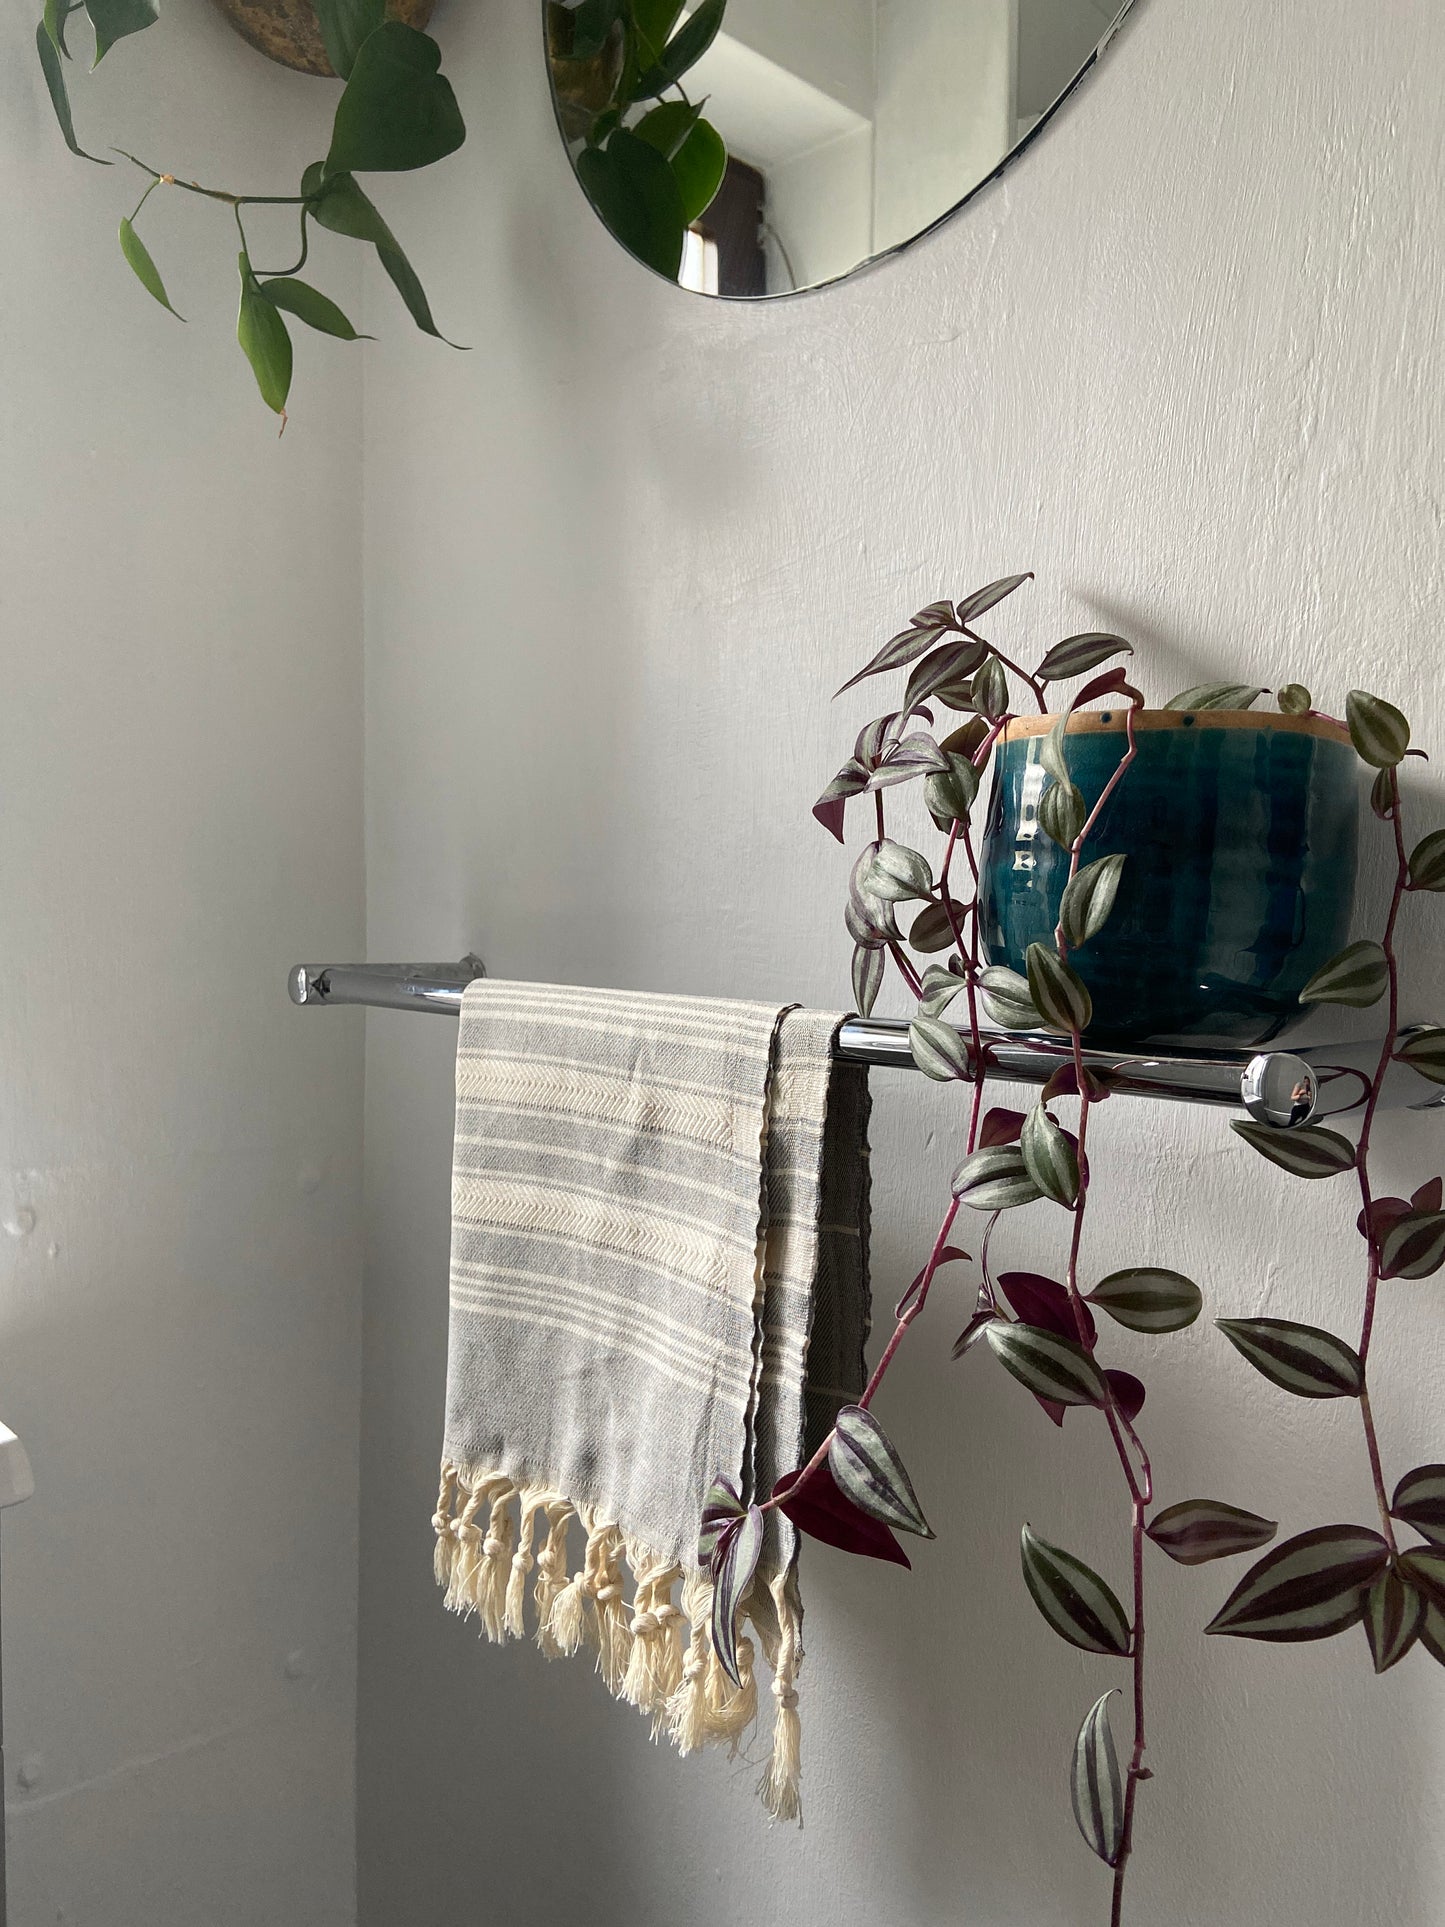 Striped Design Tea Towel - Grey Kitchen Towel - Bathroom Hand Towel - Cotton Towel